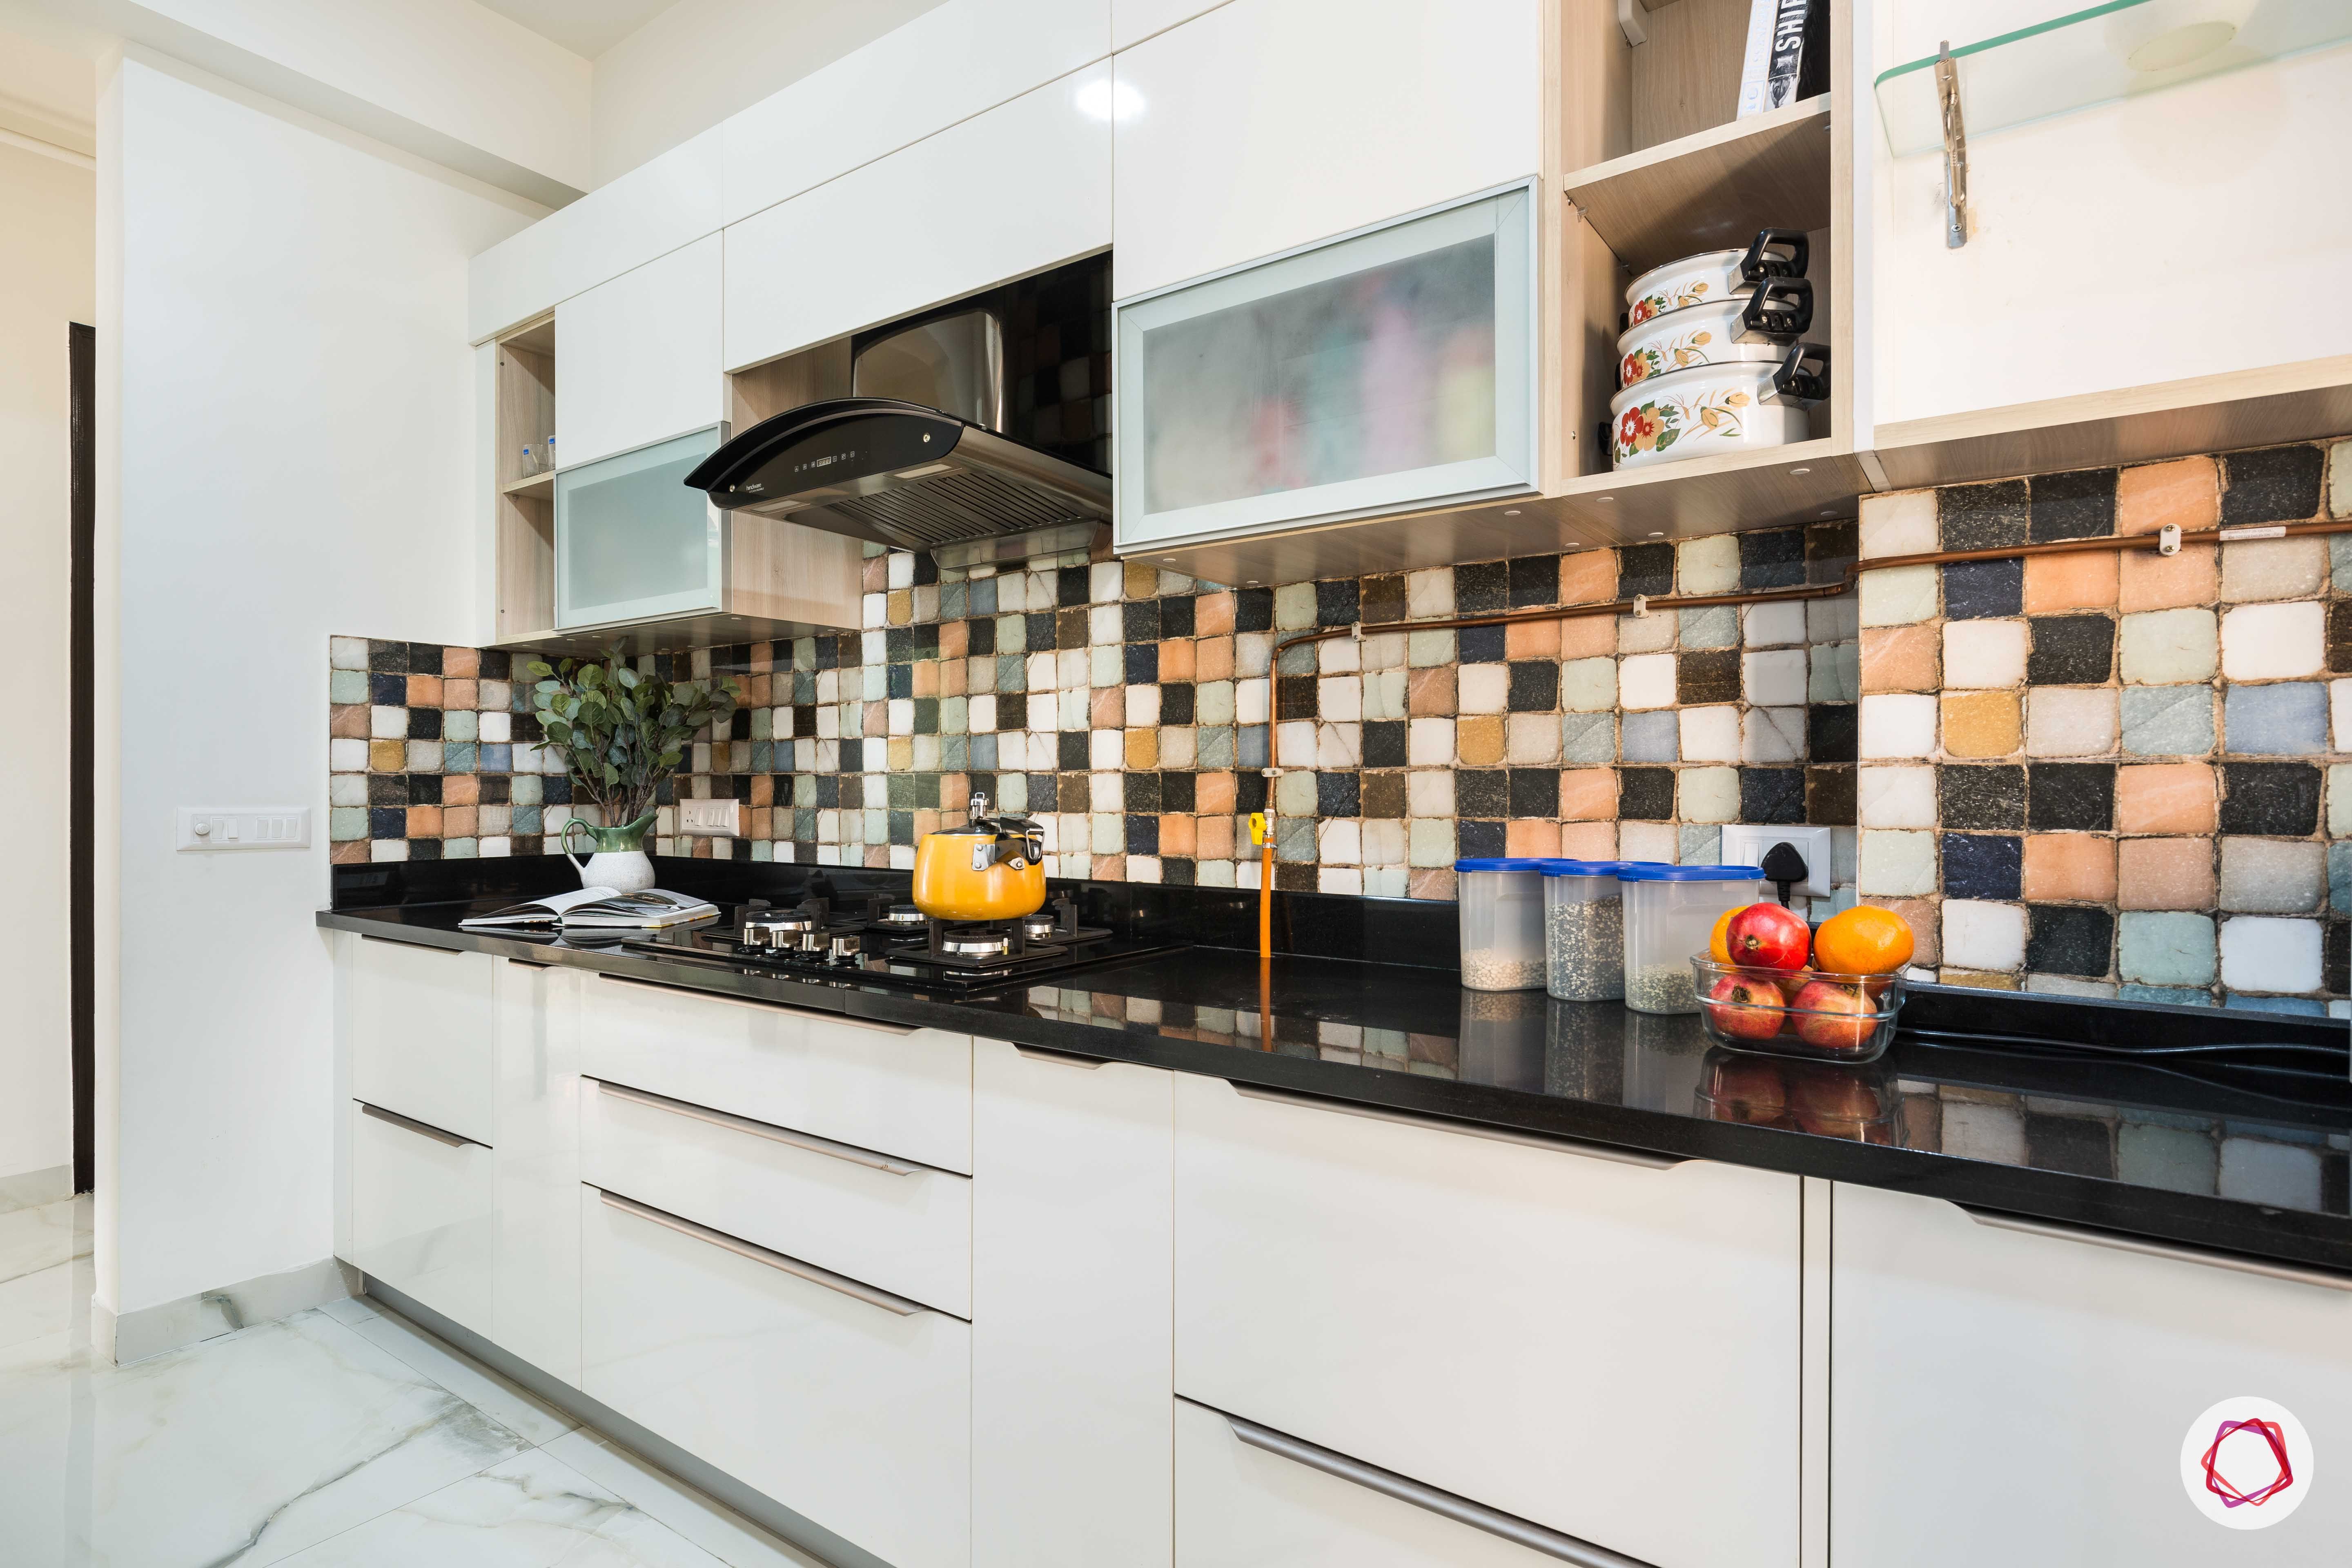 Nirala-Aspire-white-kitchen-cabinets-drawers-chimney